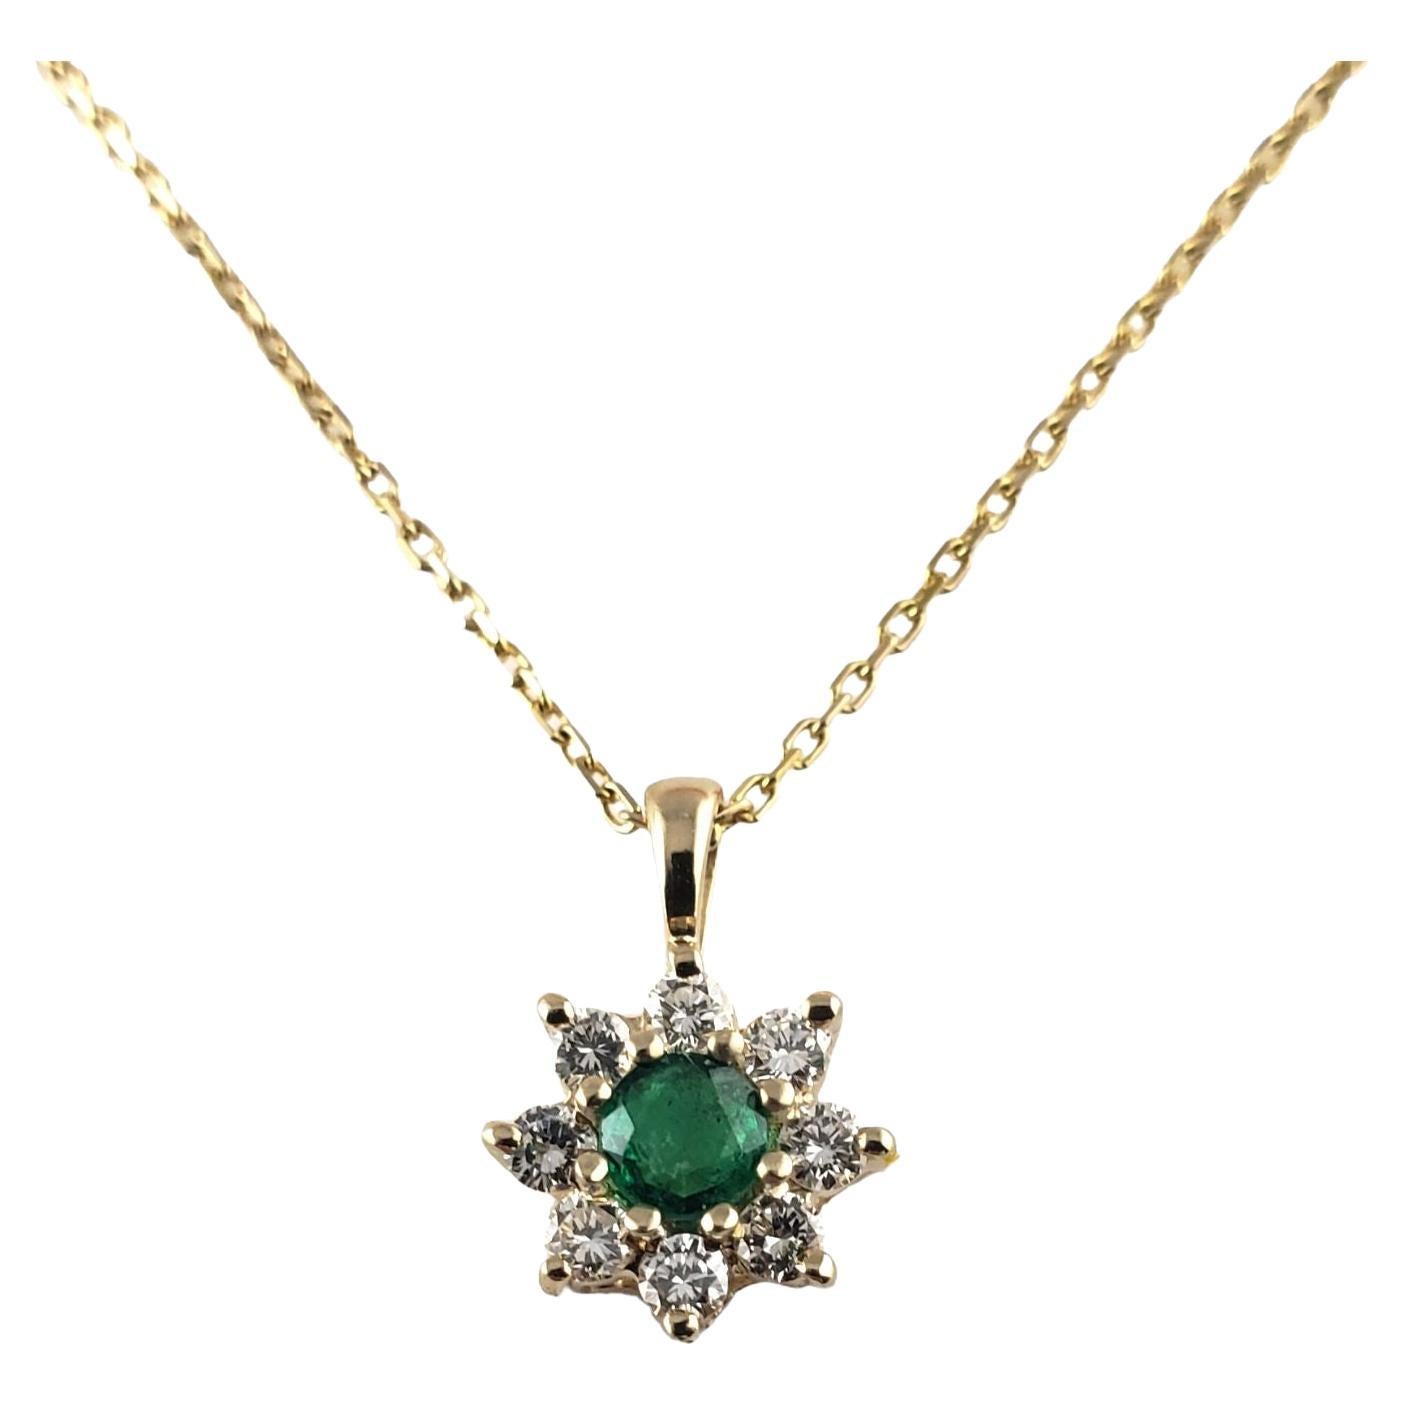 4 Karat Yellow Gold Emerald and Diamond Pendant Necklace